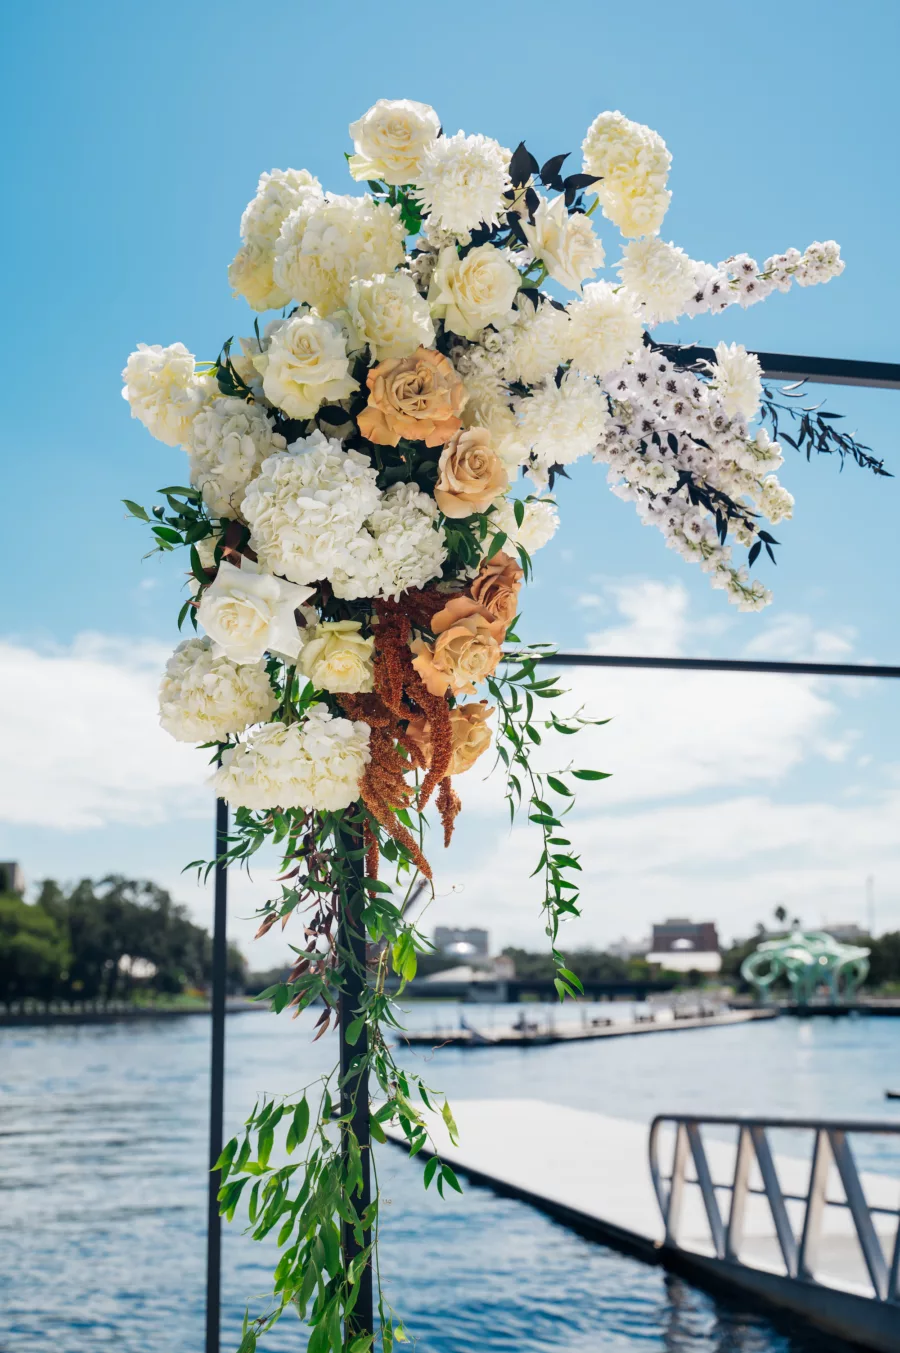 White Hydrangeas, Orange Roses, Orange Veronica, and Greenery Wedding Ceremony Altar Arch Flower Arrangement Decor Ideas